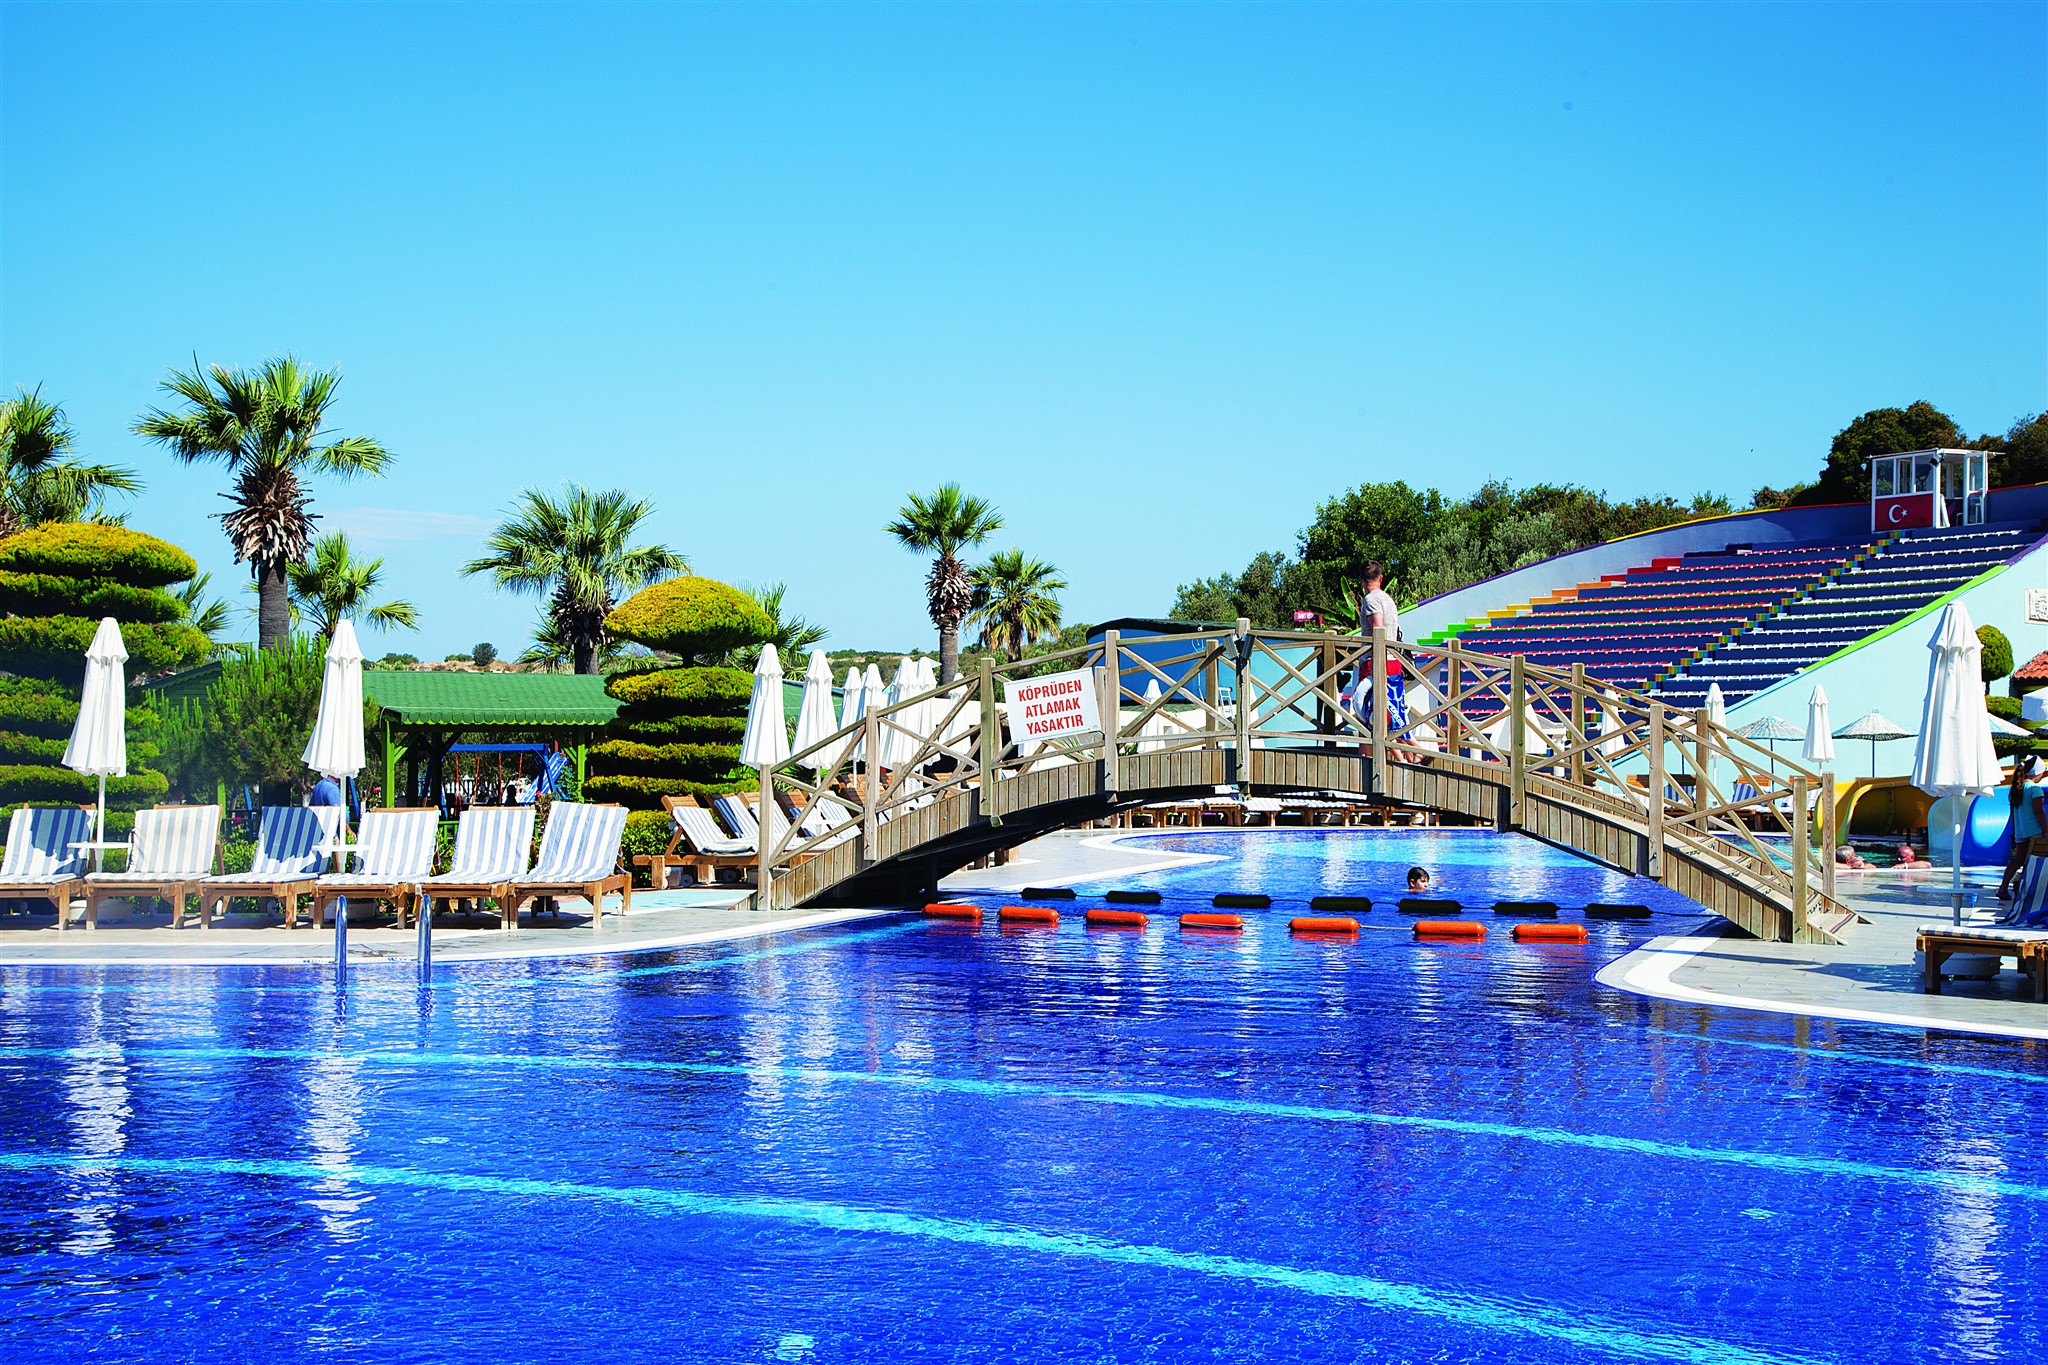 Buyuk Anadolu Didim Resort - All Inclusive (Buyuk Anadolu Didim Resort Hotel - All Inclusive)